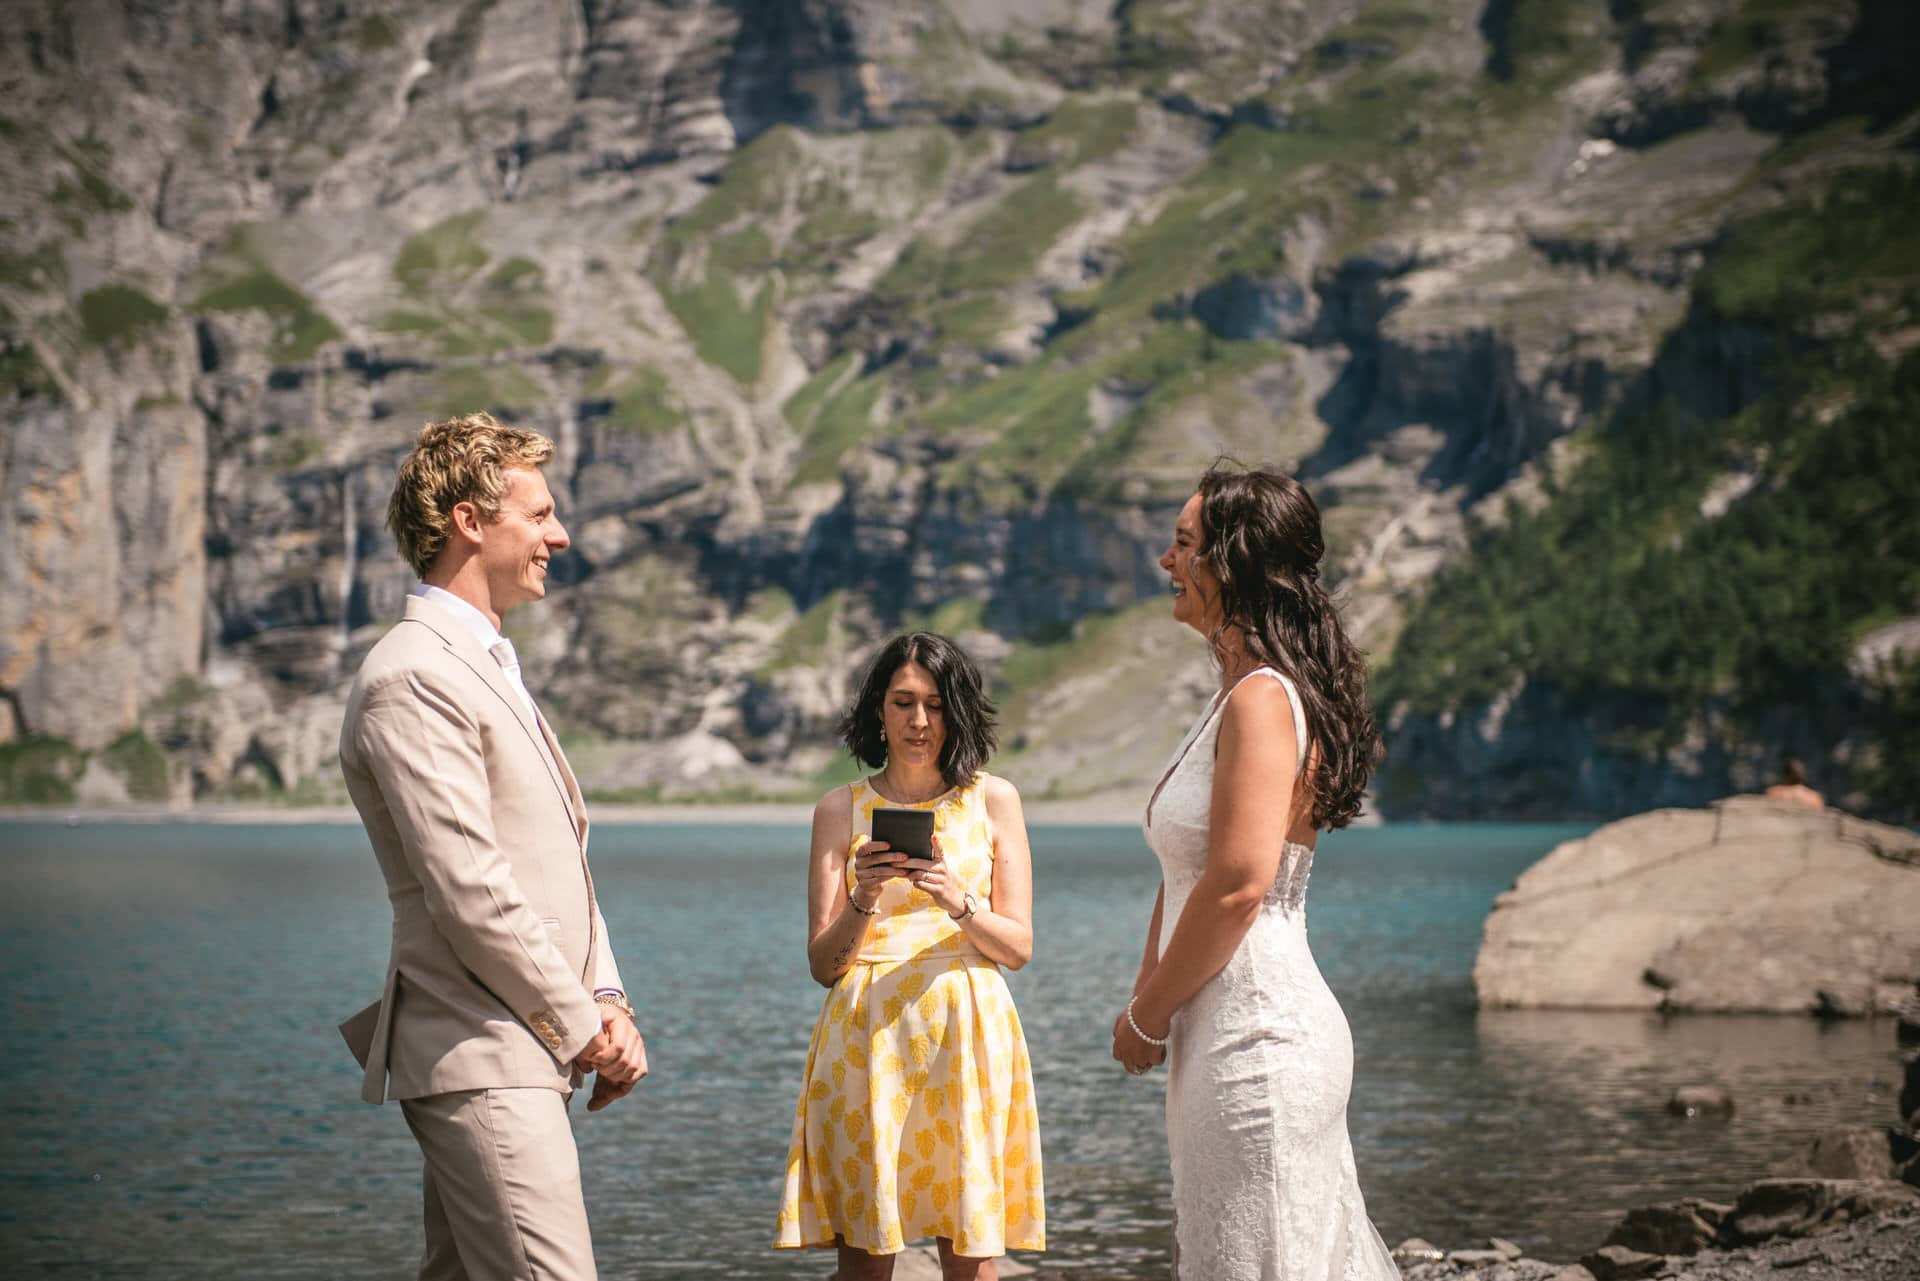 Peaks witnessed their promises - hiking elopement in Switzerland.